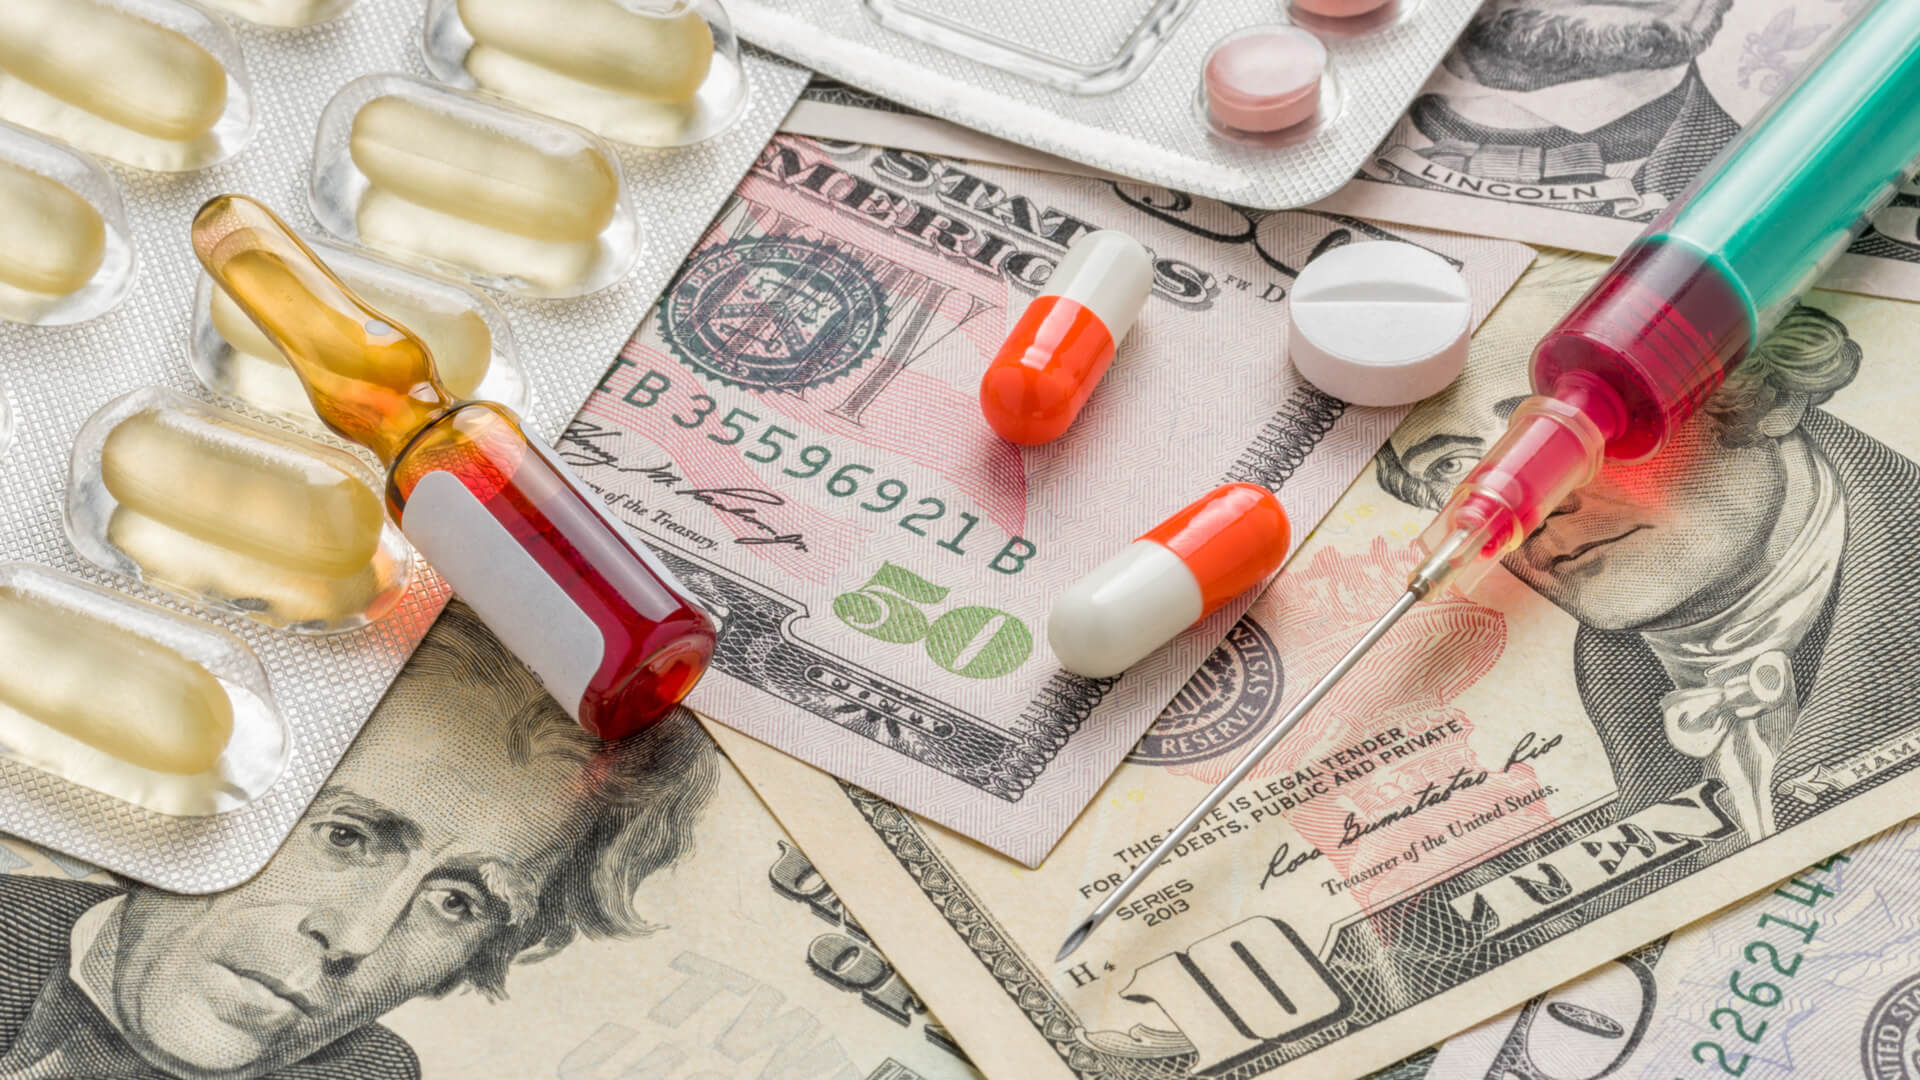 Big Bucks, Big Pharma: Marketing Disease & Pushing Drugs